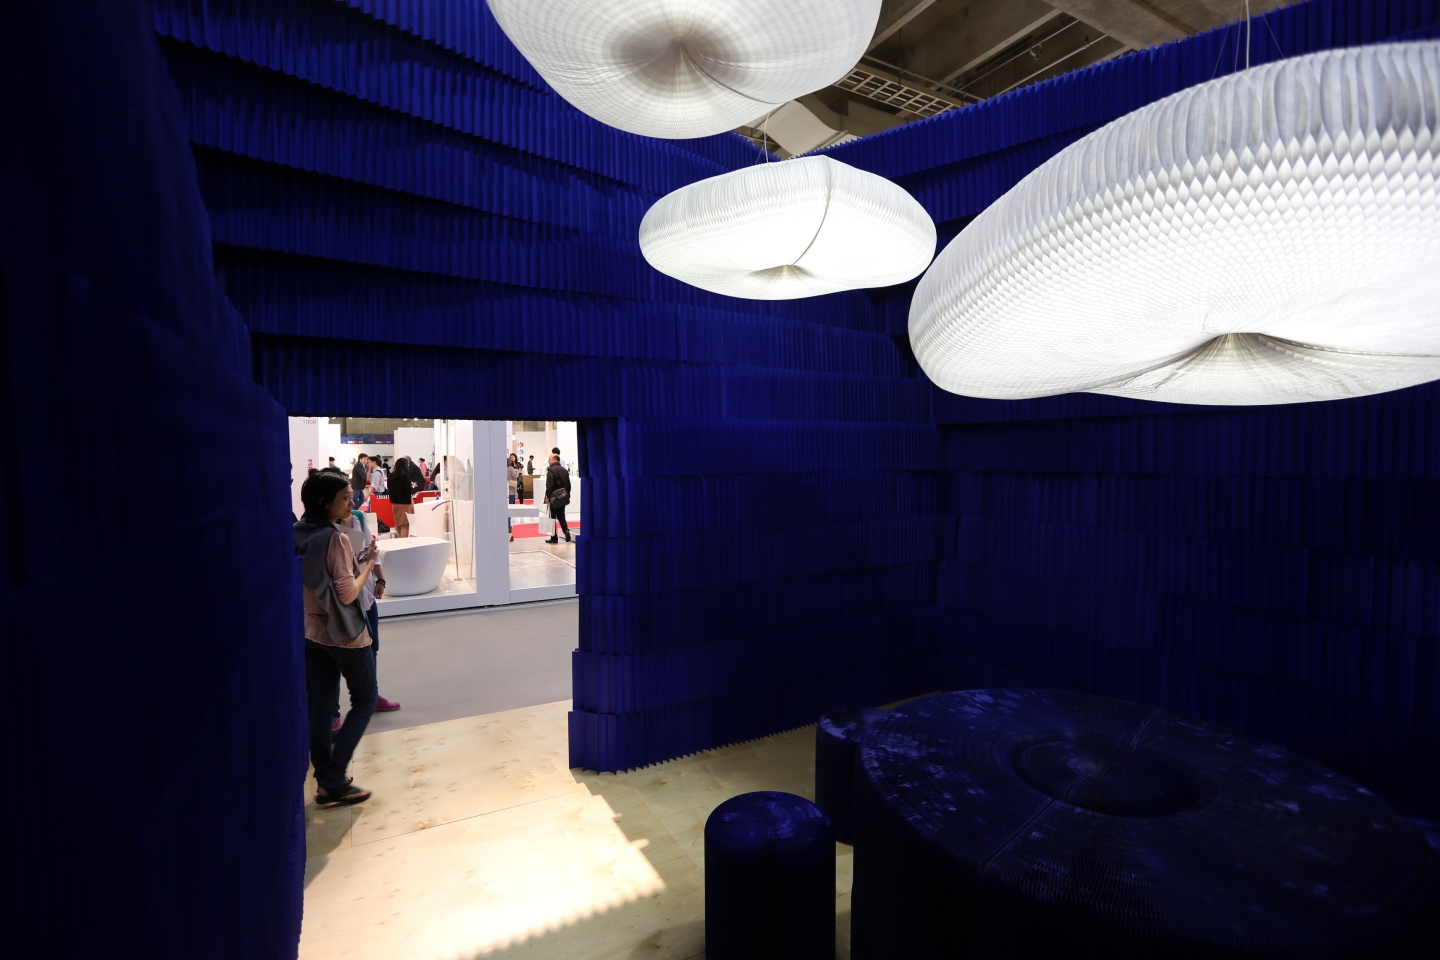 cloud softlight pendants inside the molo installation at ICFF 2012 - indigo paper softblock / modular room divider